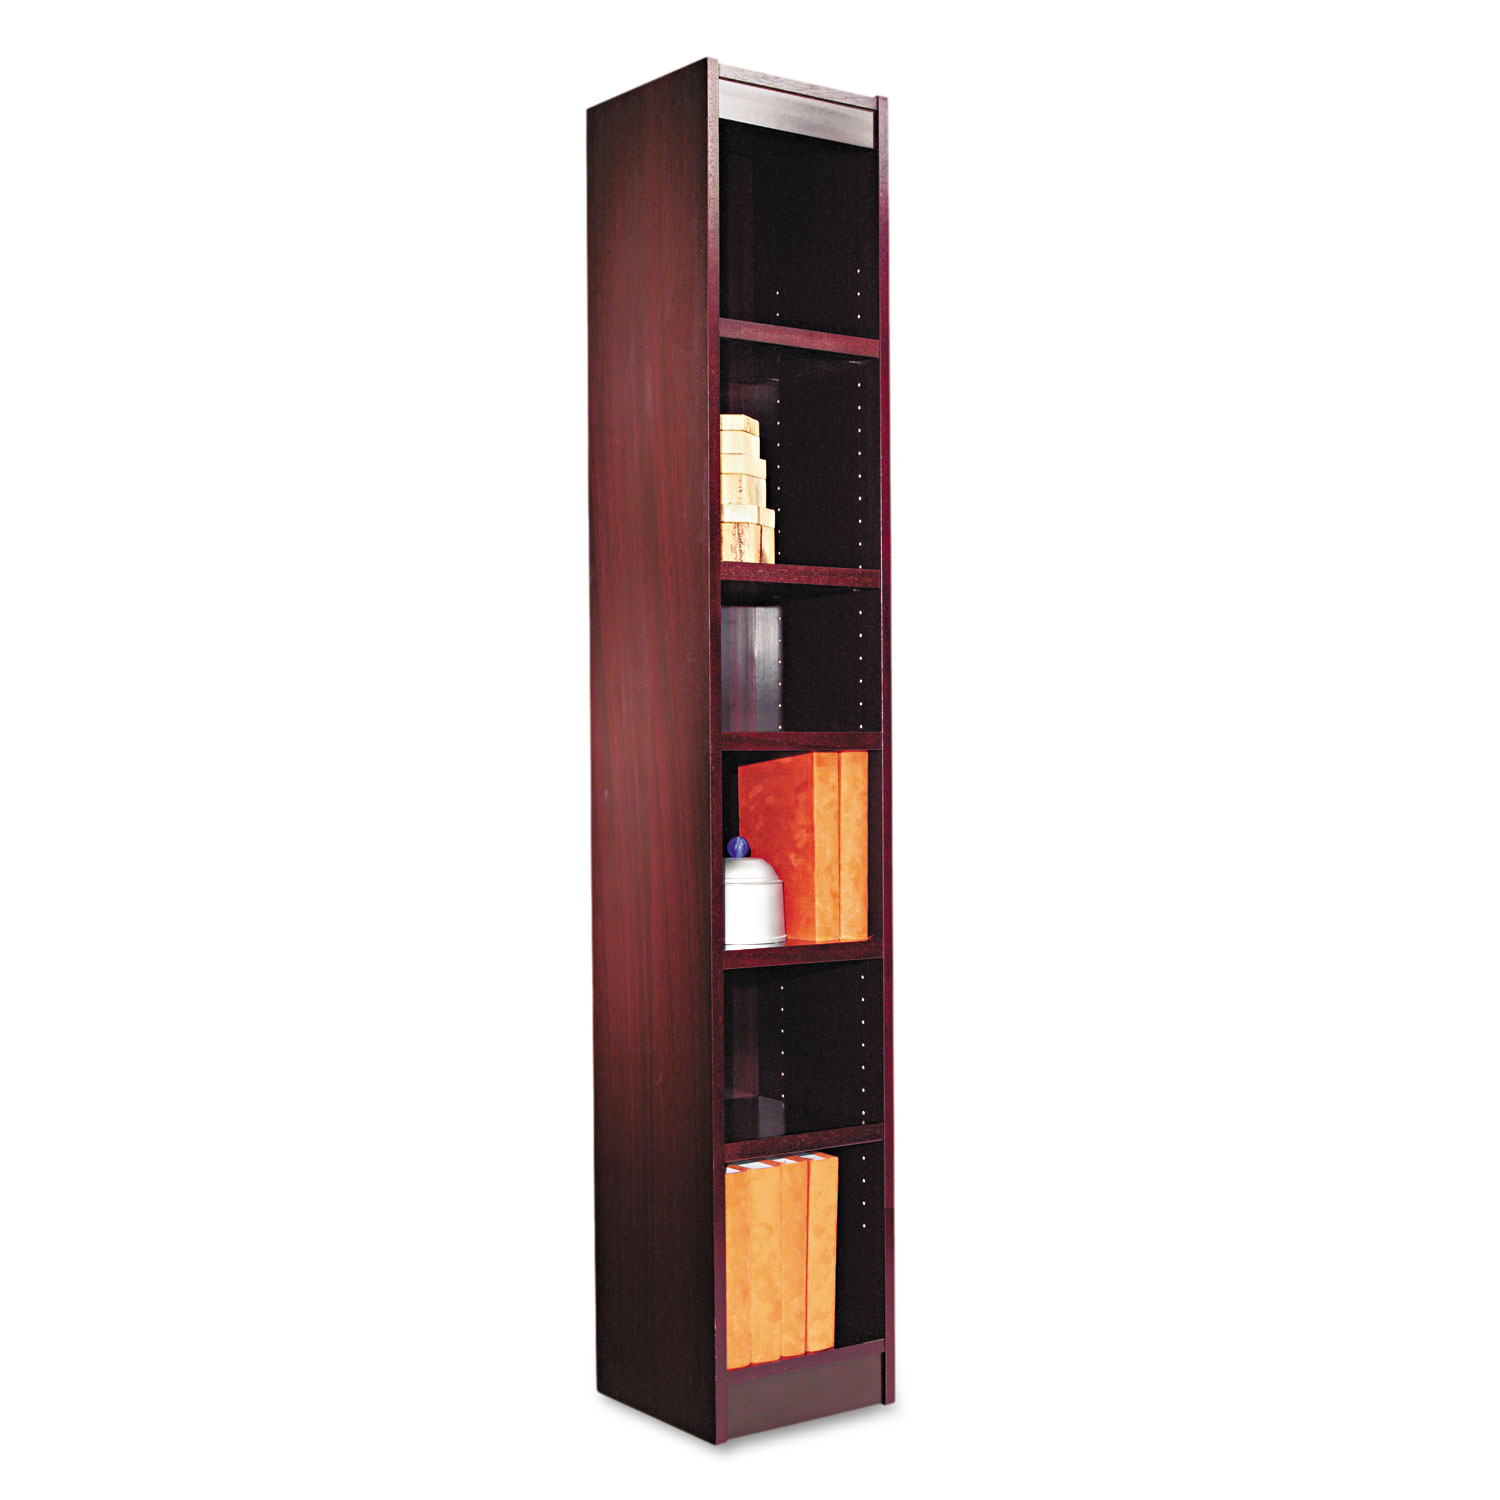 Narrow Profile Bookcase Wood Veneer, Narrow Profile Bookcase